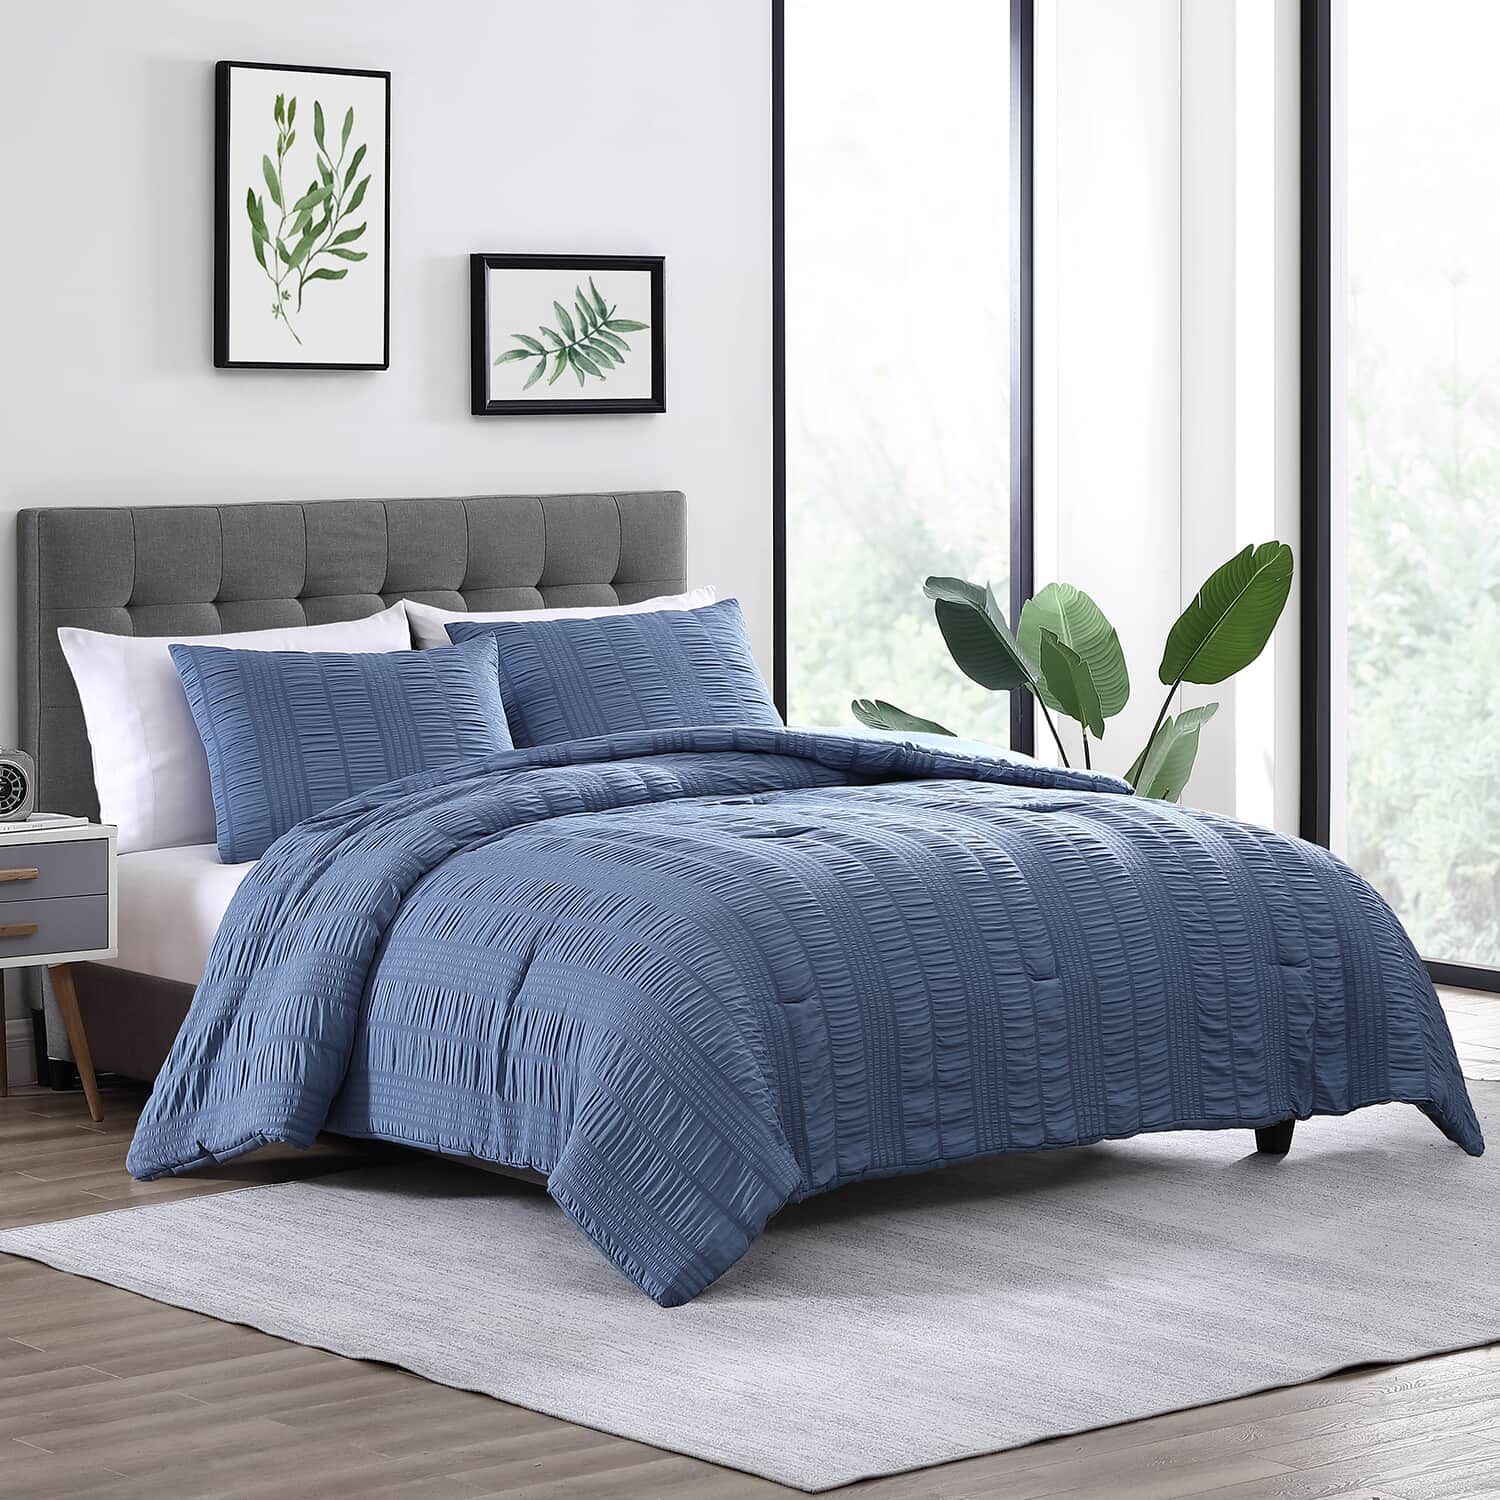 Buy The Nesting Company- Elm 3 Piece Comforter Set - Blue (King